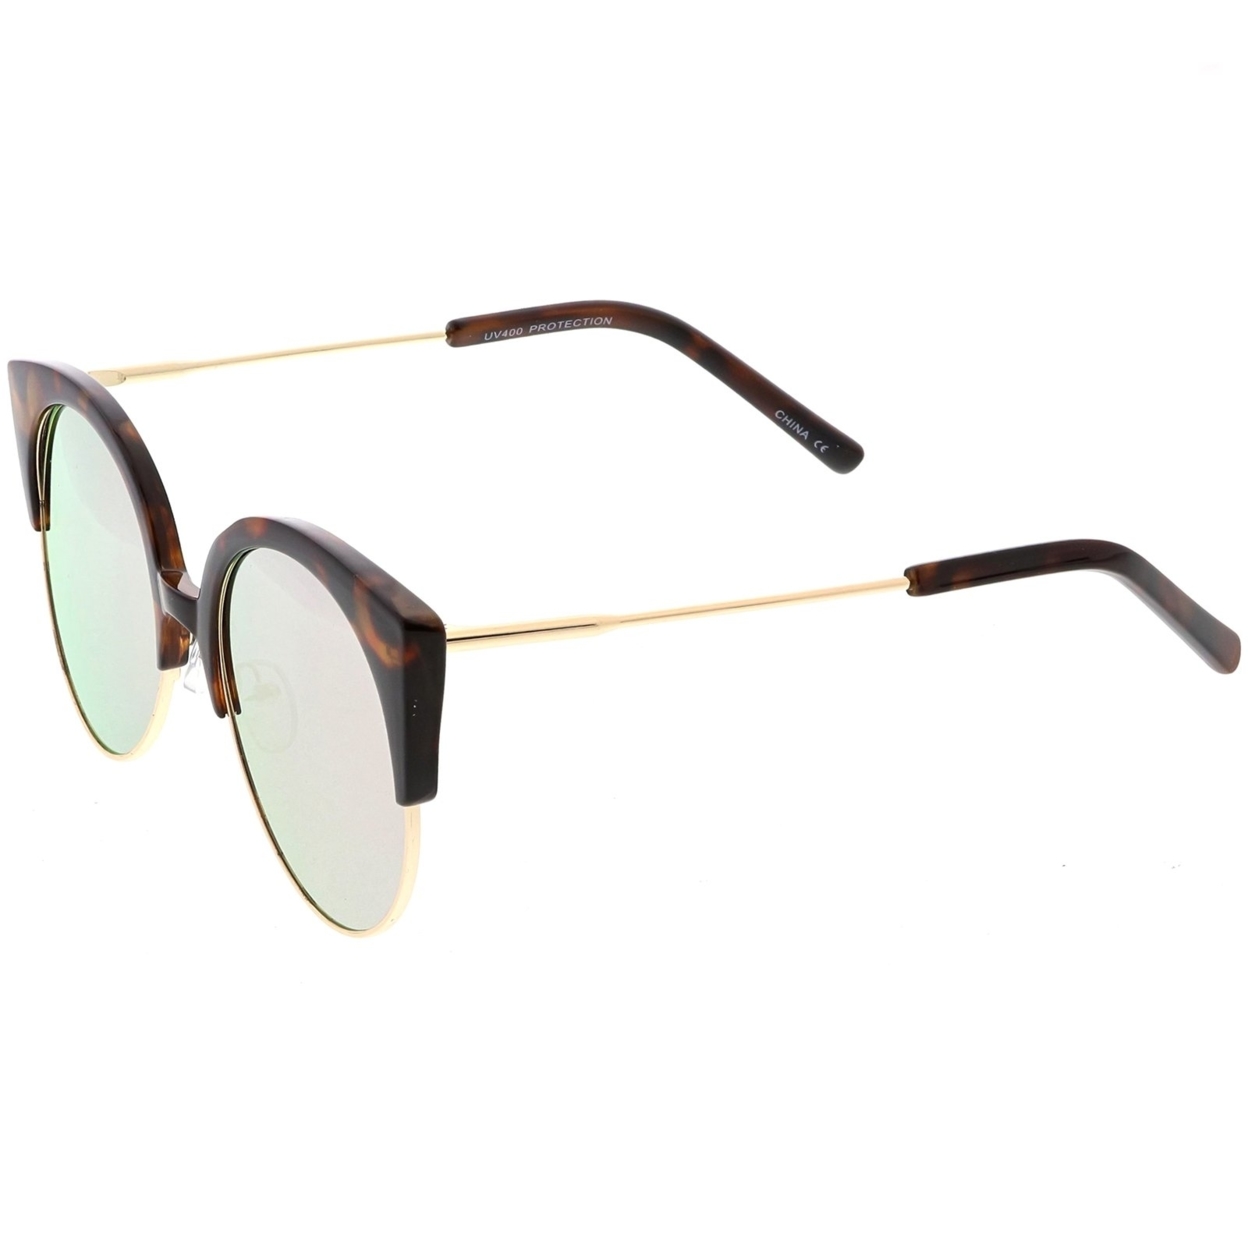 Women's Half Frame Cat Eye Sunglasses Ultra Slim Arms Mirrored Round Flat Lens 53mm - Black Gold / Purple Mirror